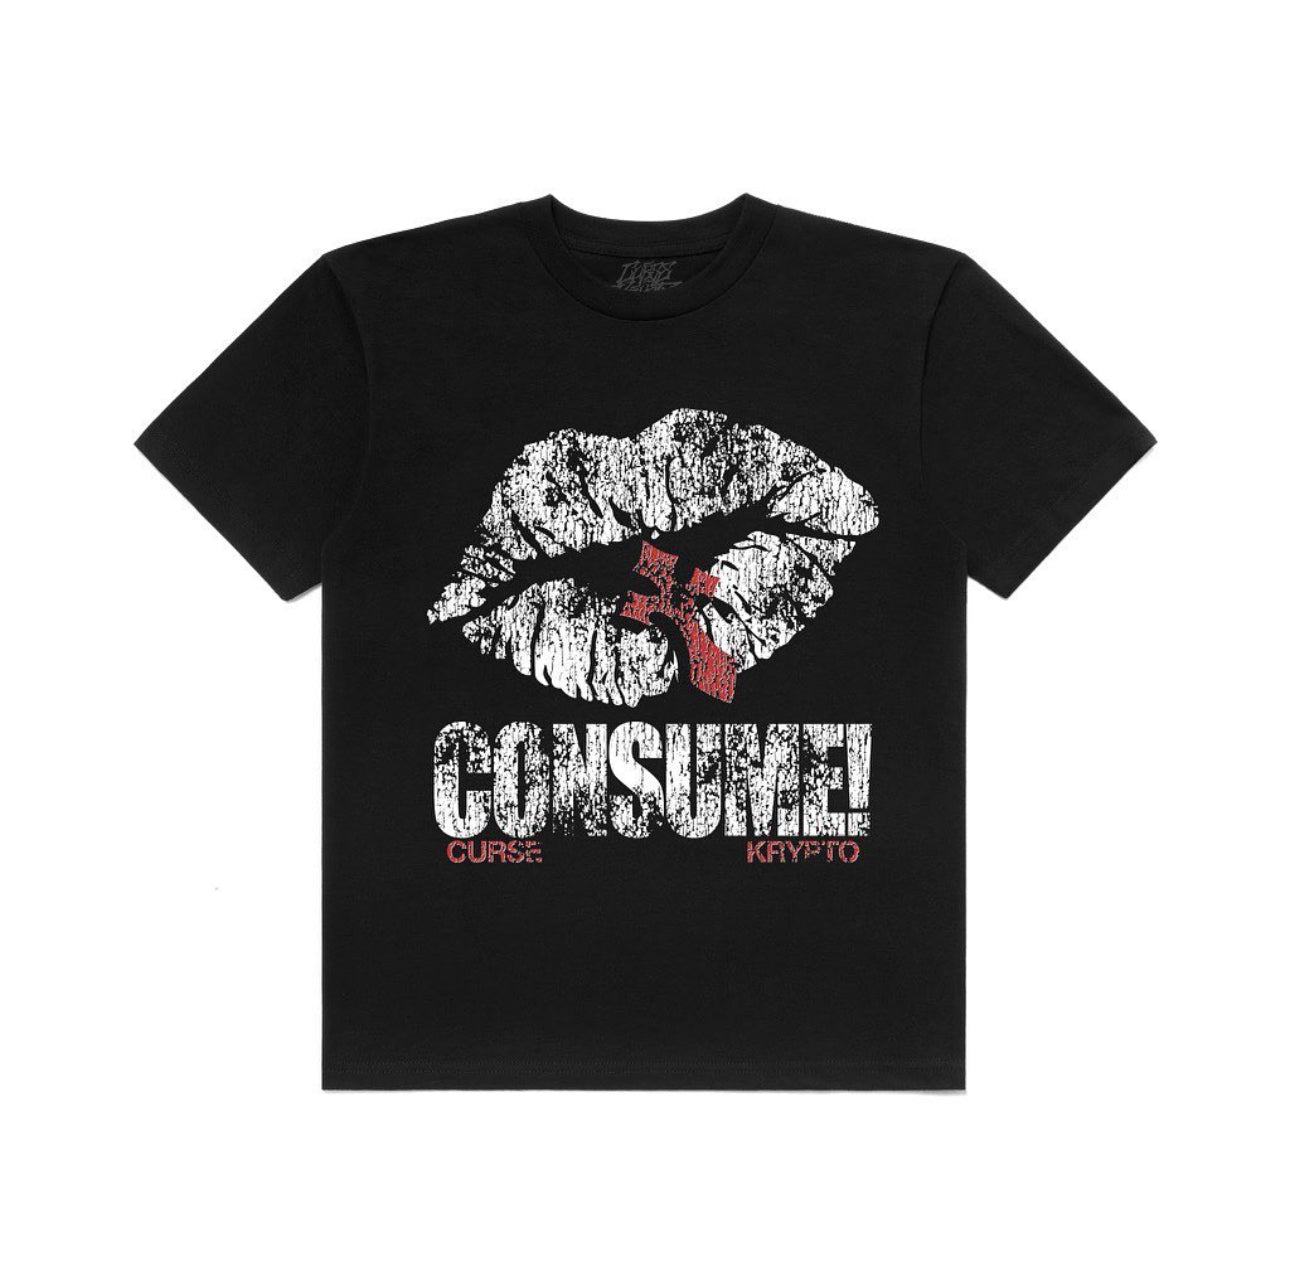 Consume Krypto Curse t-shirt